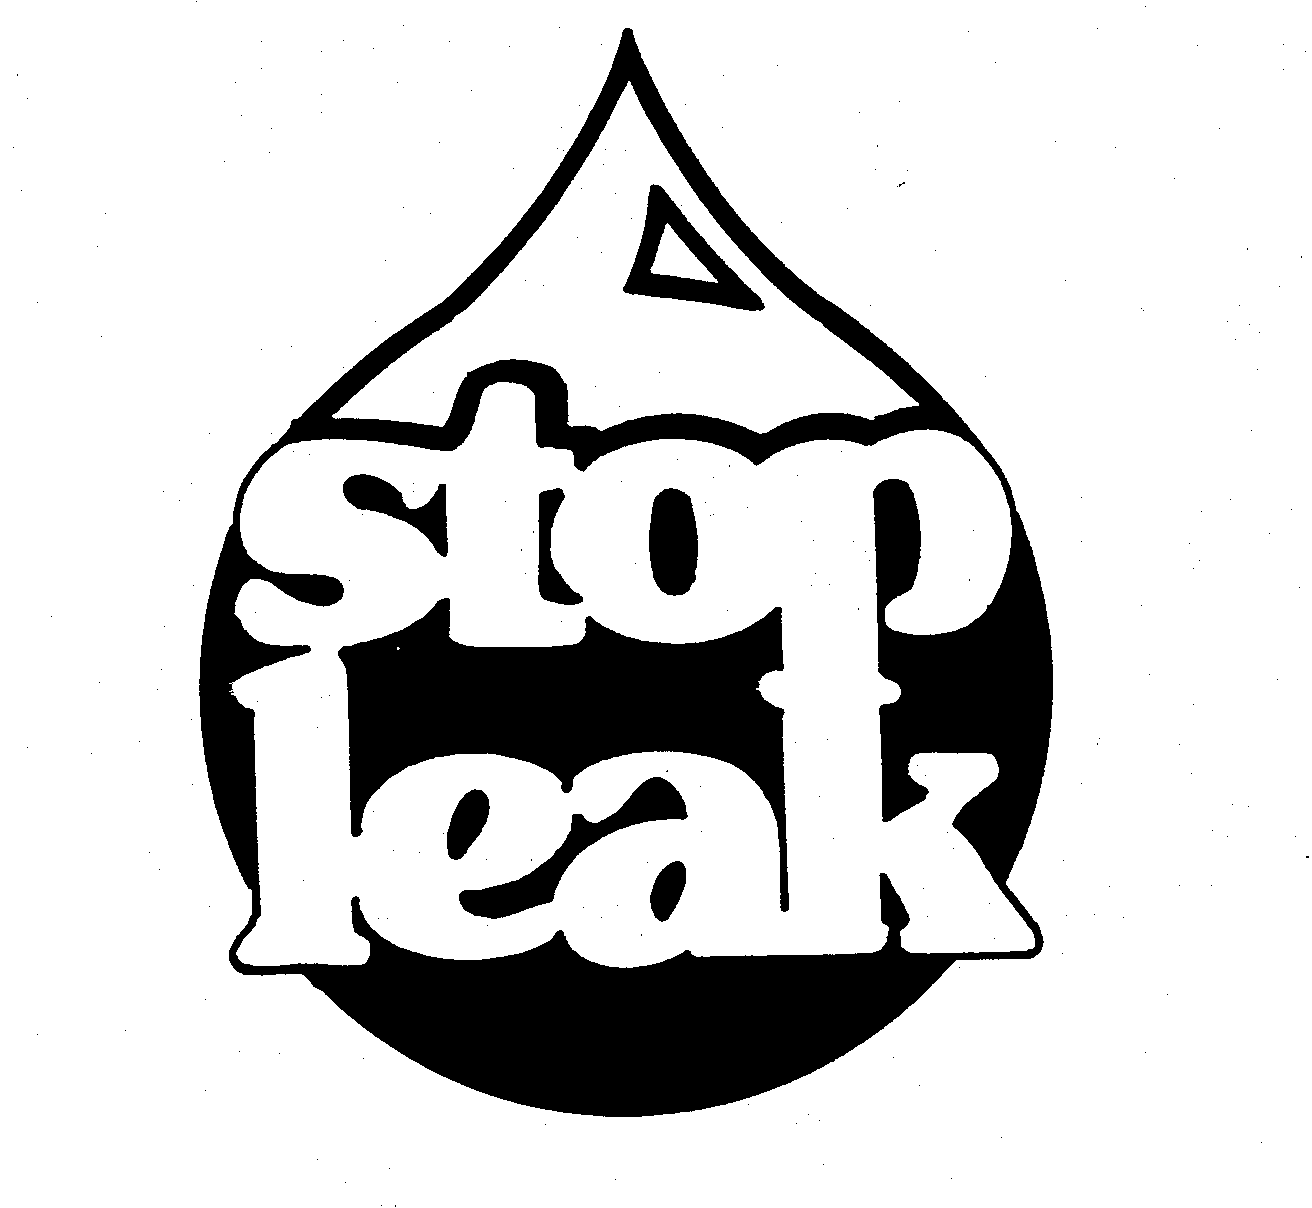 Trademark Logo STOP LEAK